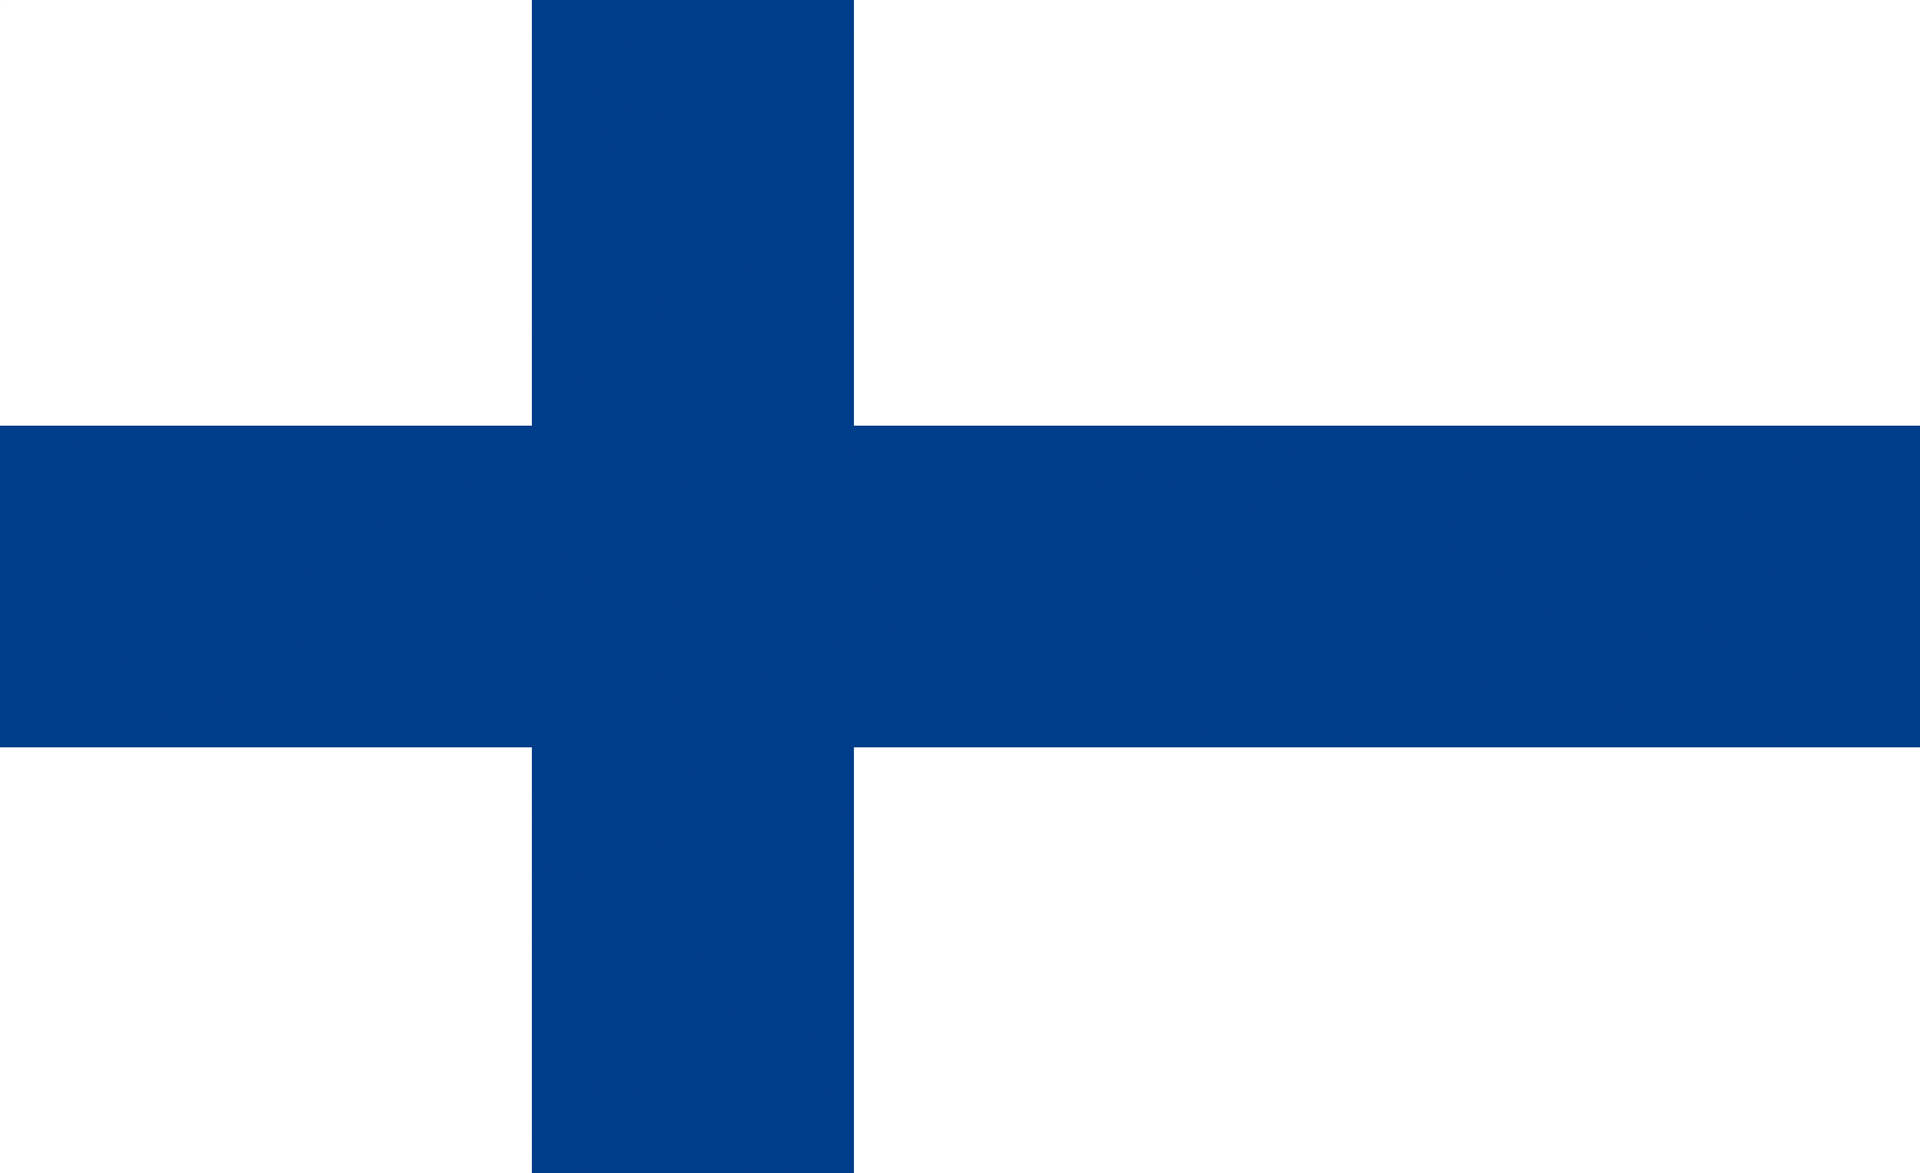 Finland National Flag